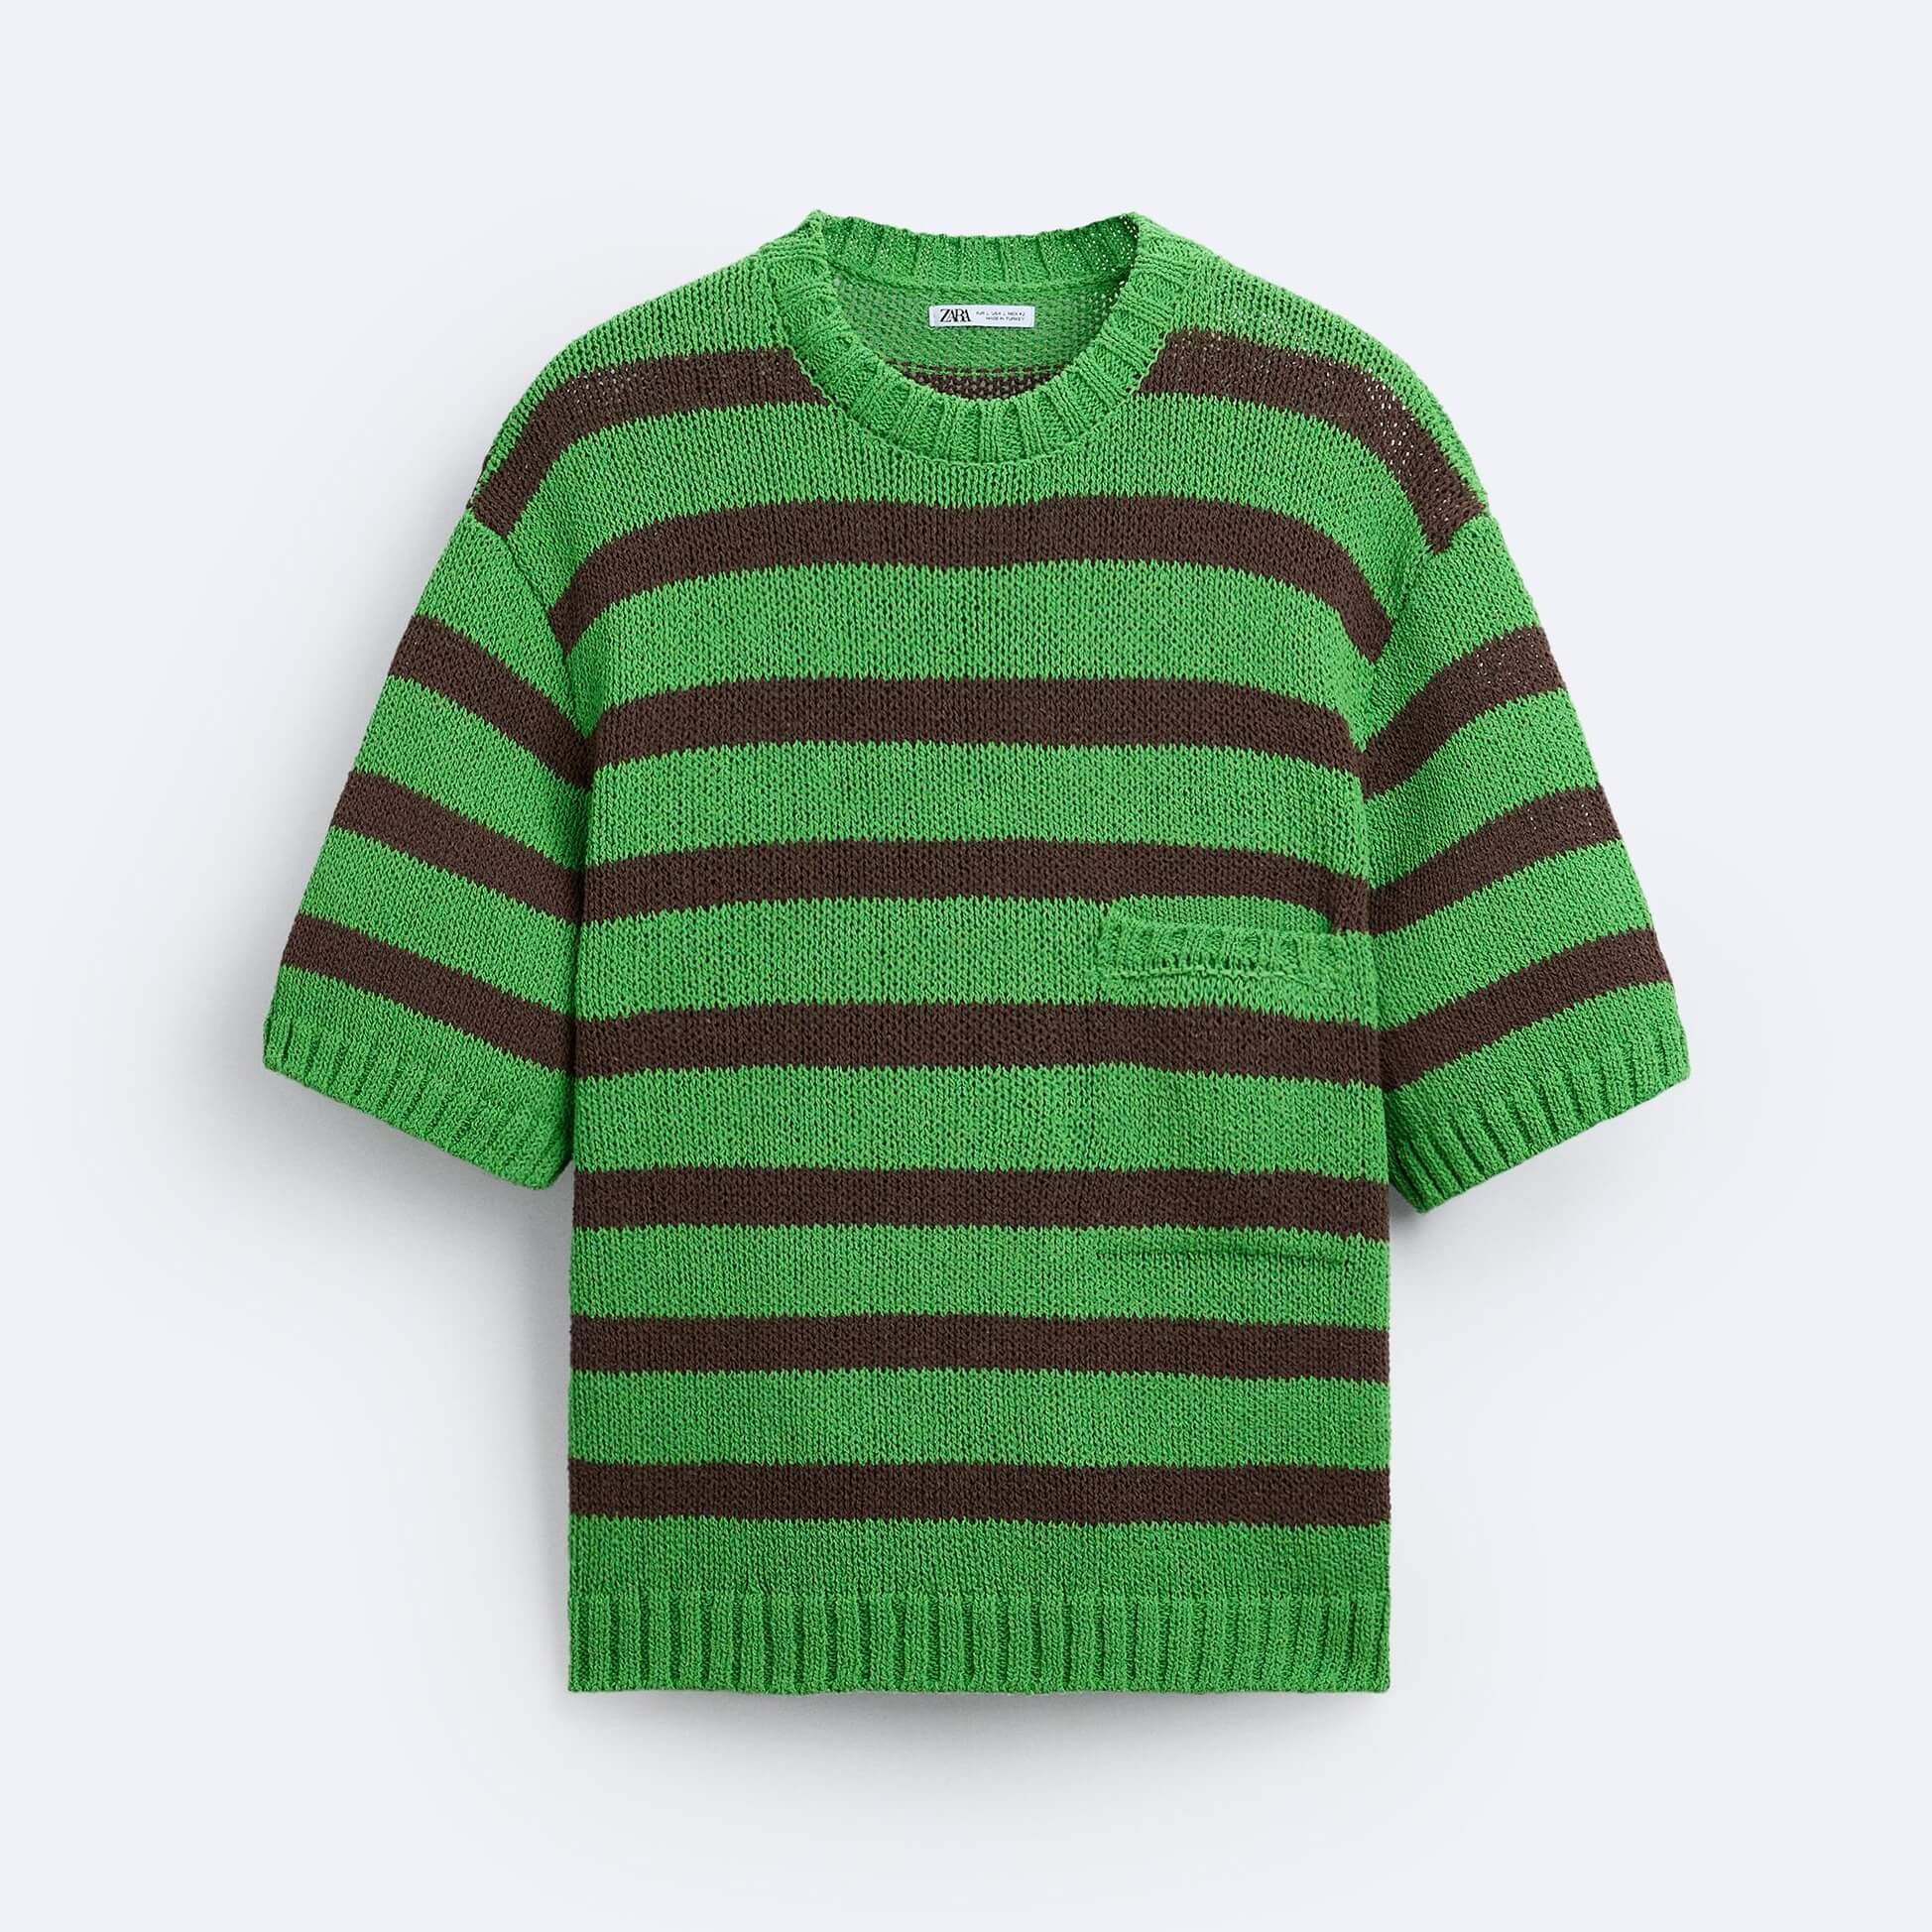 Футболка Zara Striped Knit, зеленый/коричневый поло zara striped knit shirt зеленый